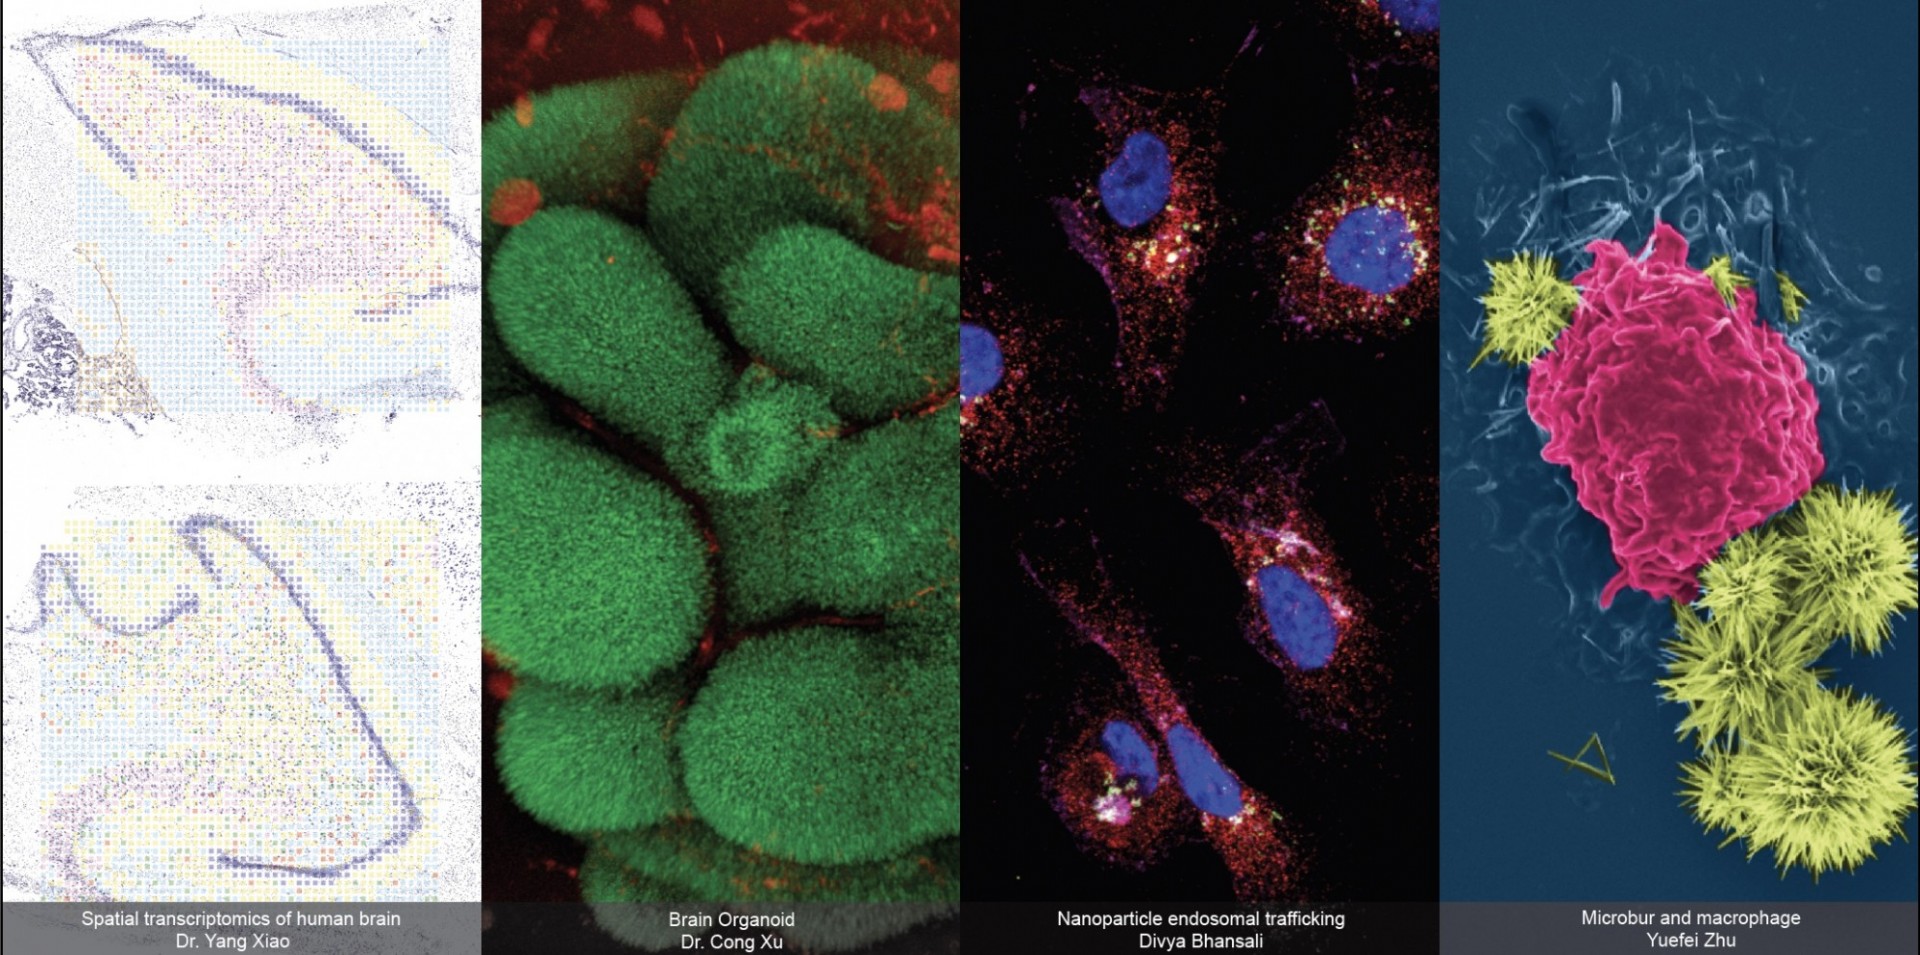 Left to right: spatial transcriptomics of human brain; brain organoid; nanoparticle endosomal trafficking; Microbur and macrophage